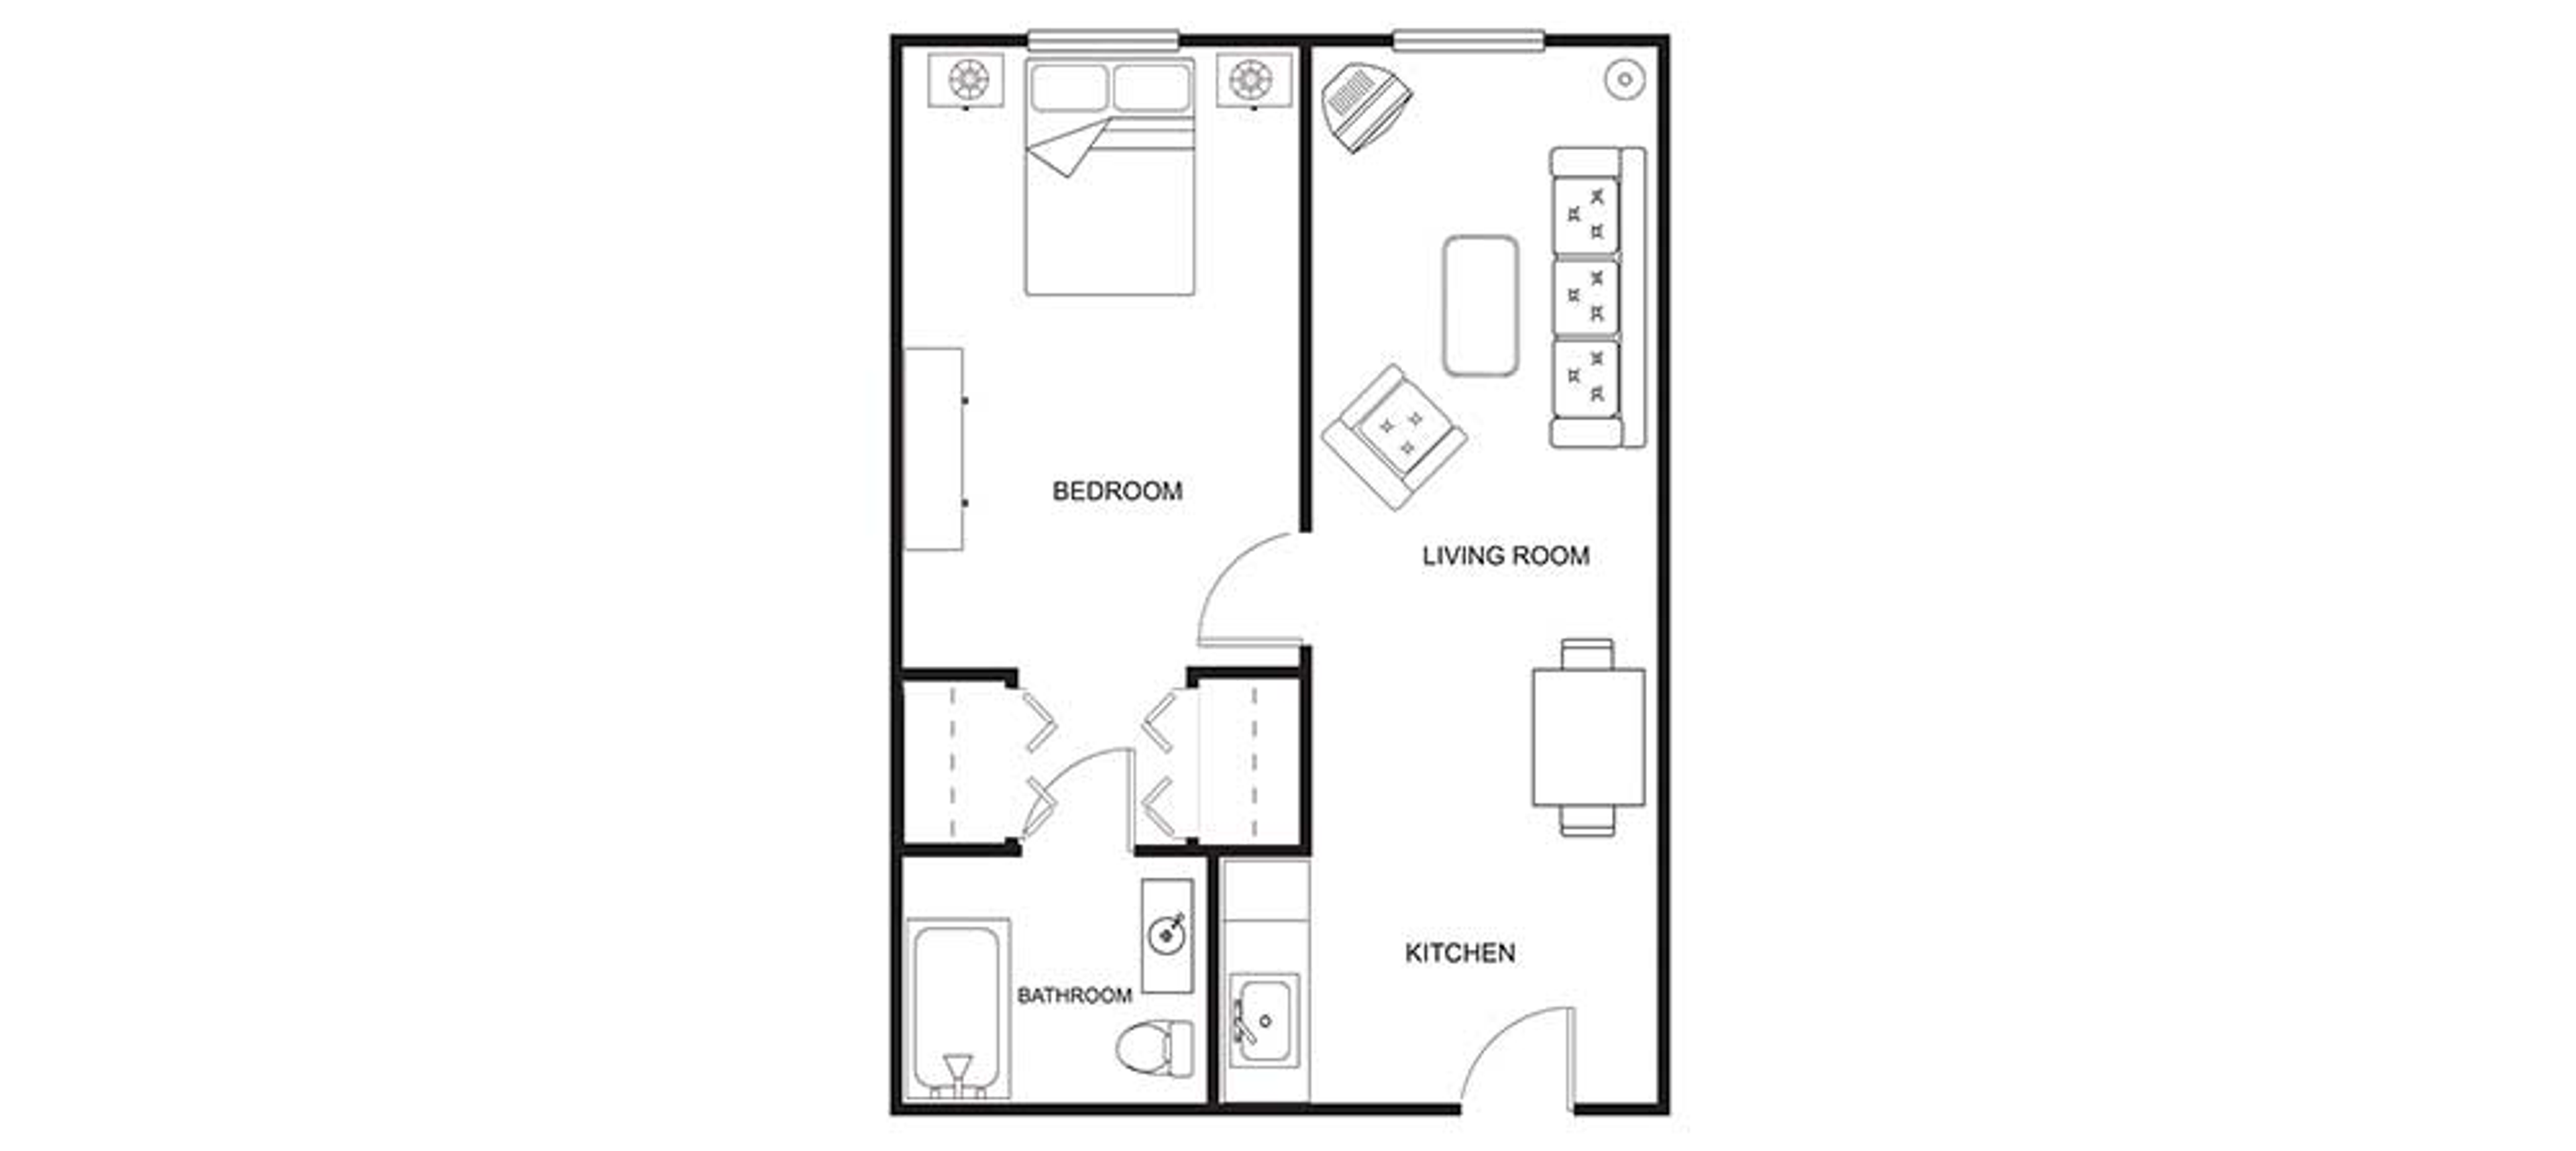 Floorplan - Bay Side Terrace - 1B 1B B1 Assisted Living